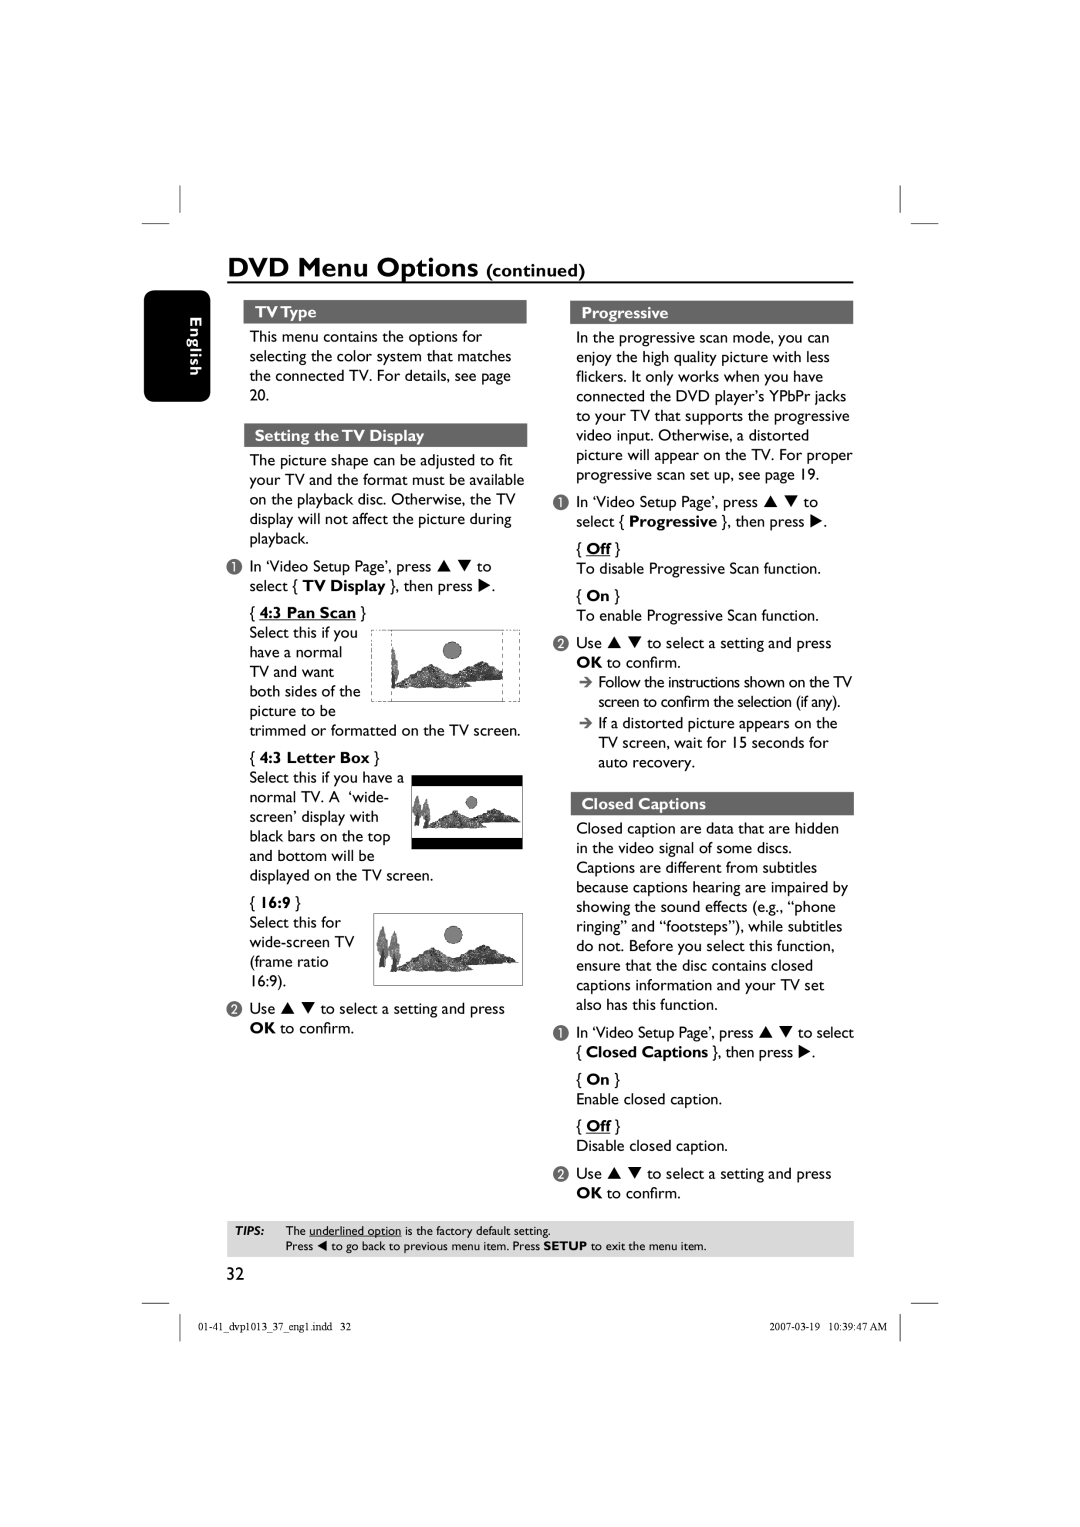 Philips DVP1013 manual English TV Type, Setting the TV Display, Progressive, Closed Captions 